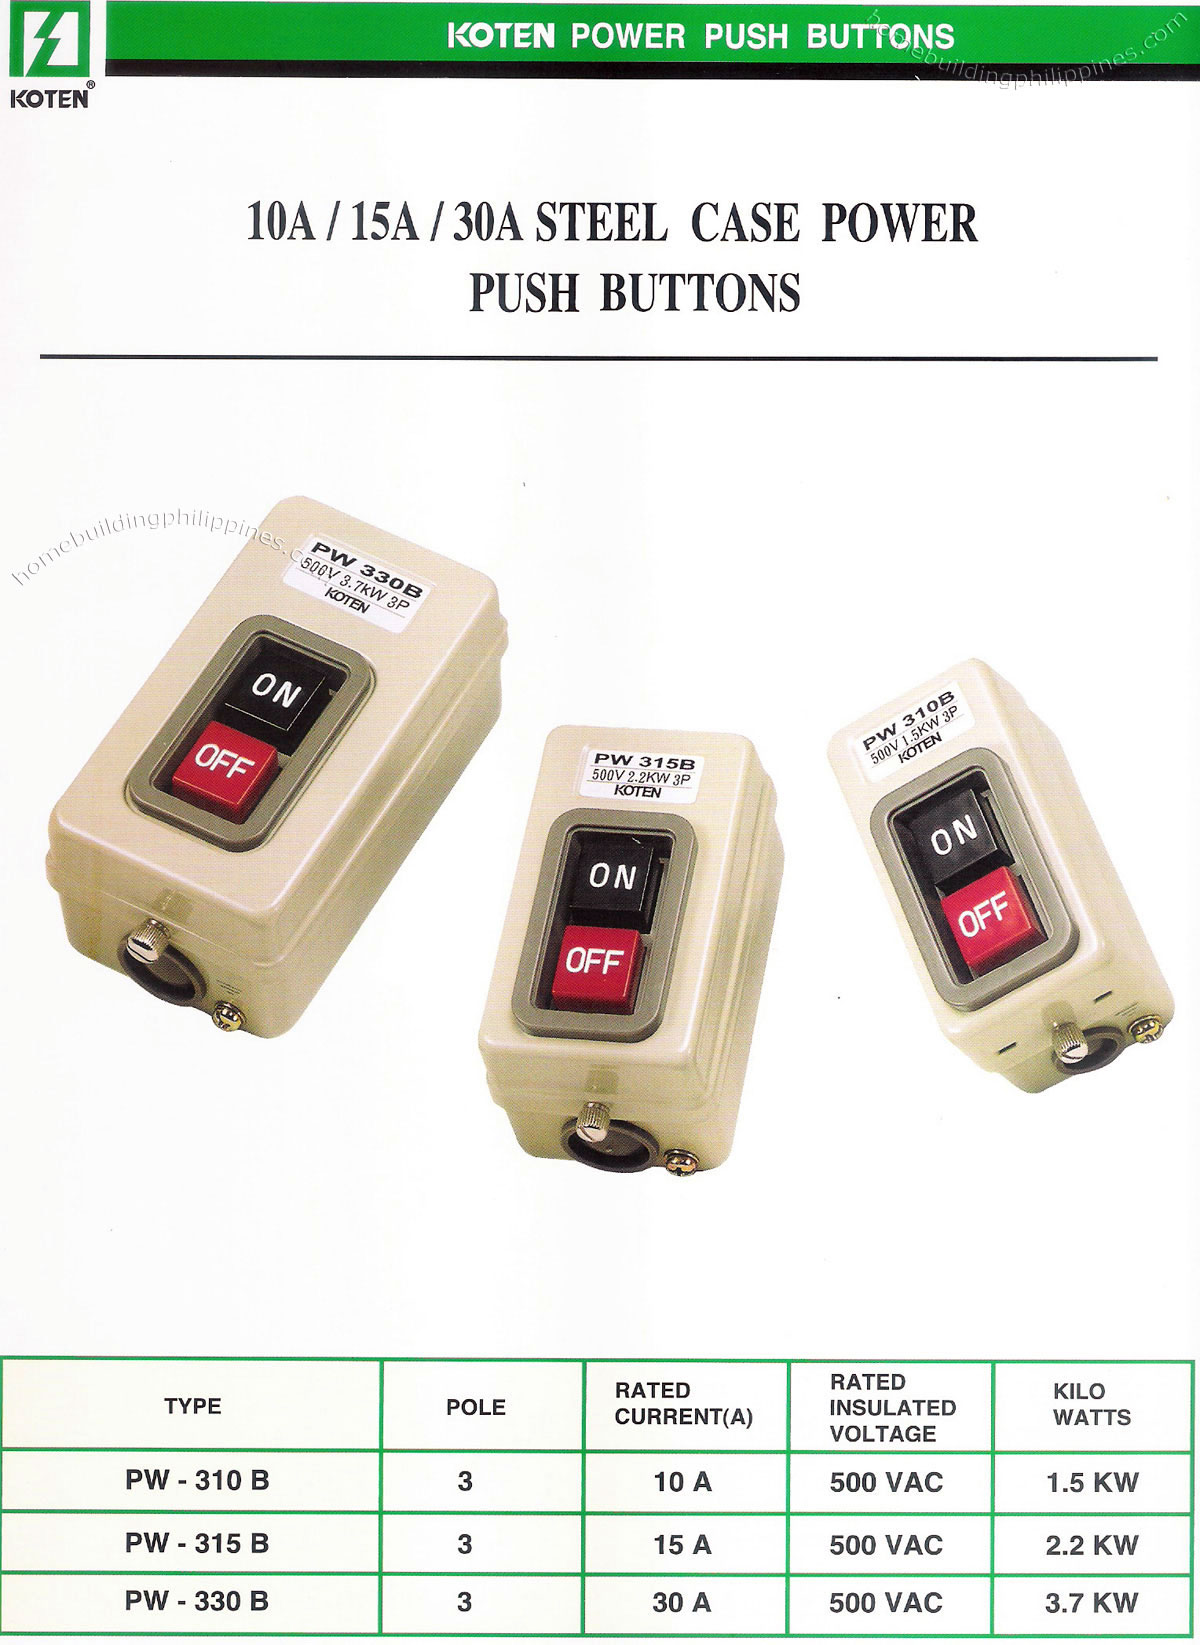 Koten Steel Case Power Push Buttons